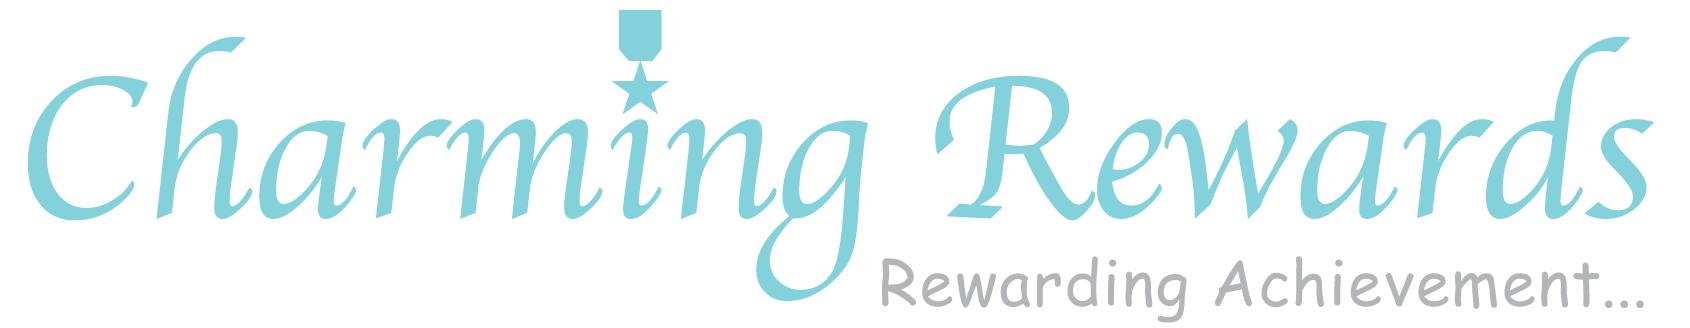 Charming Rewards logo